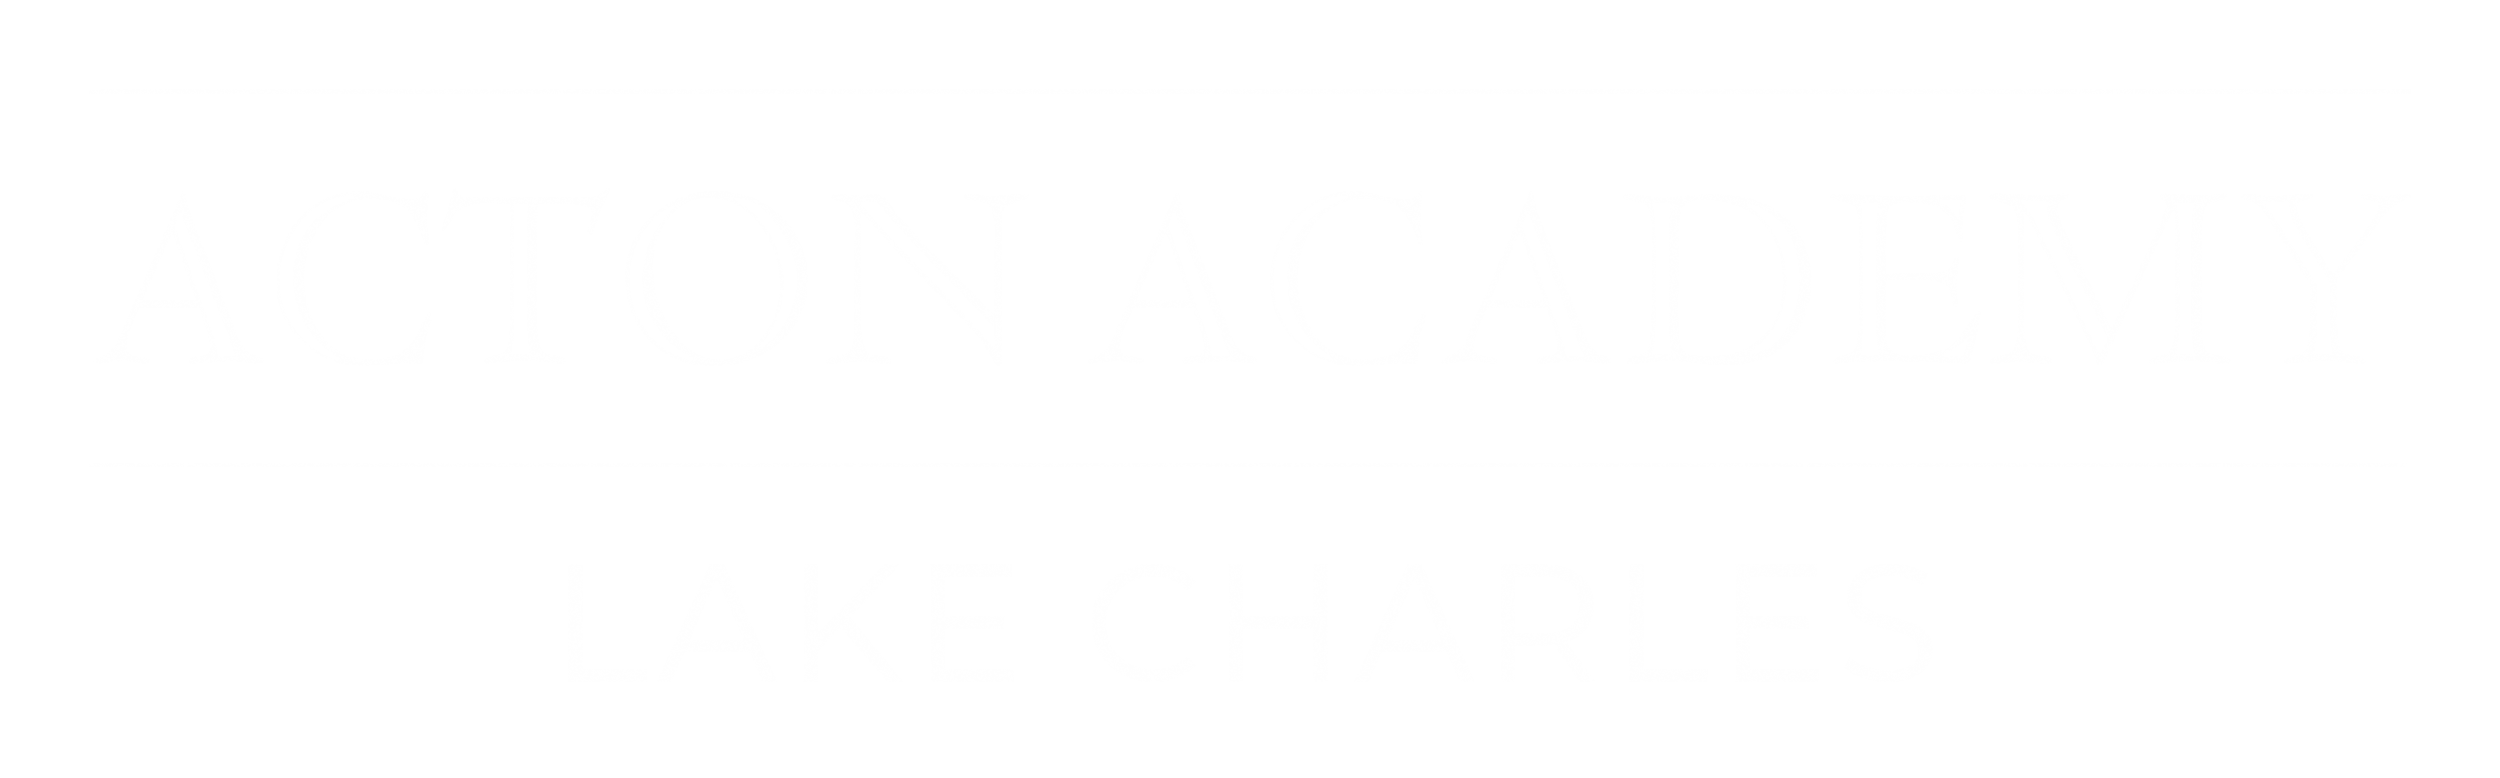 Acton Academy Lake Charles